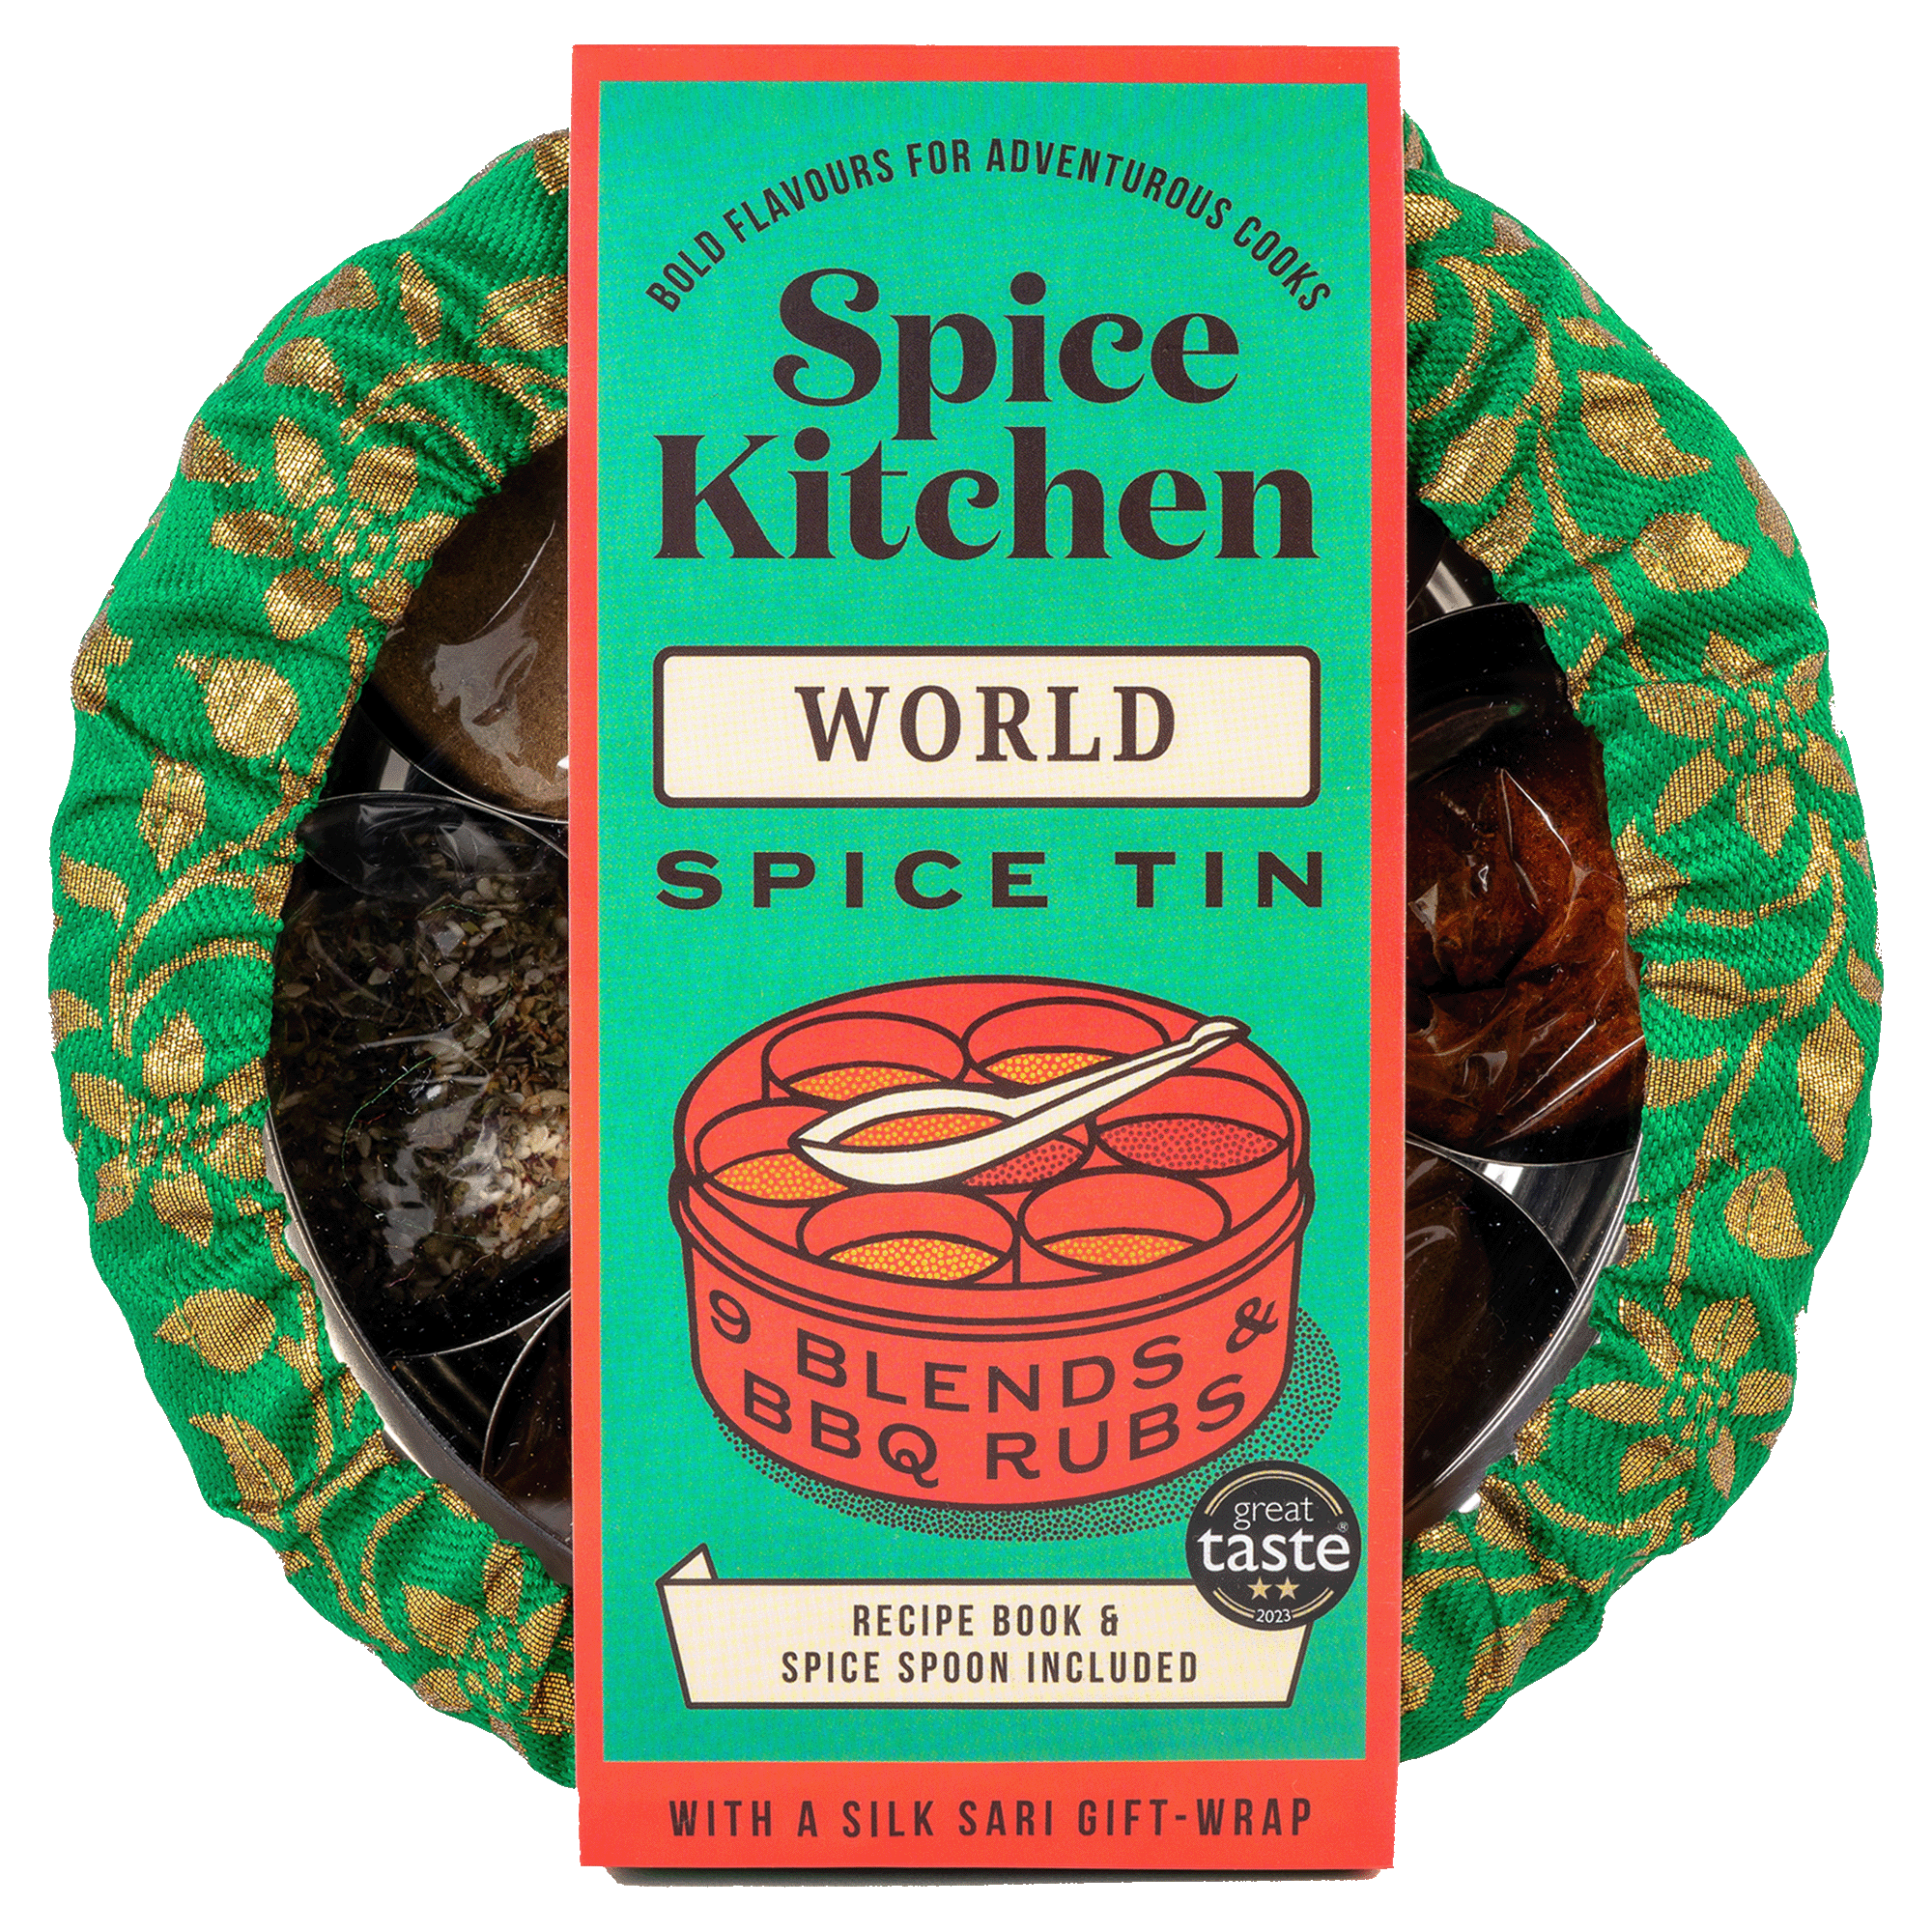 World Spice Blends & Rubs Spice Tin with 9 Blends & Rubs